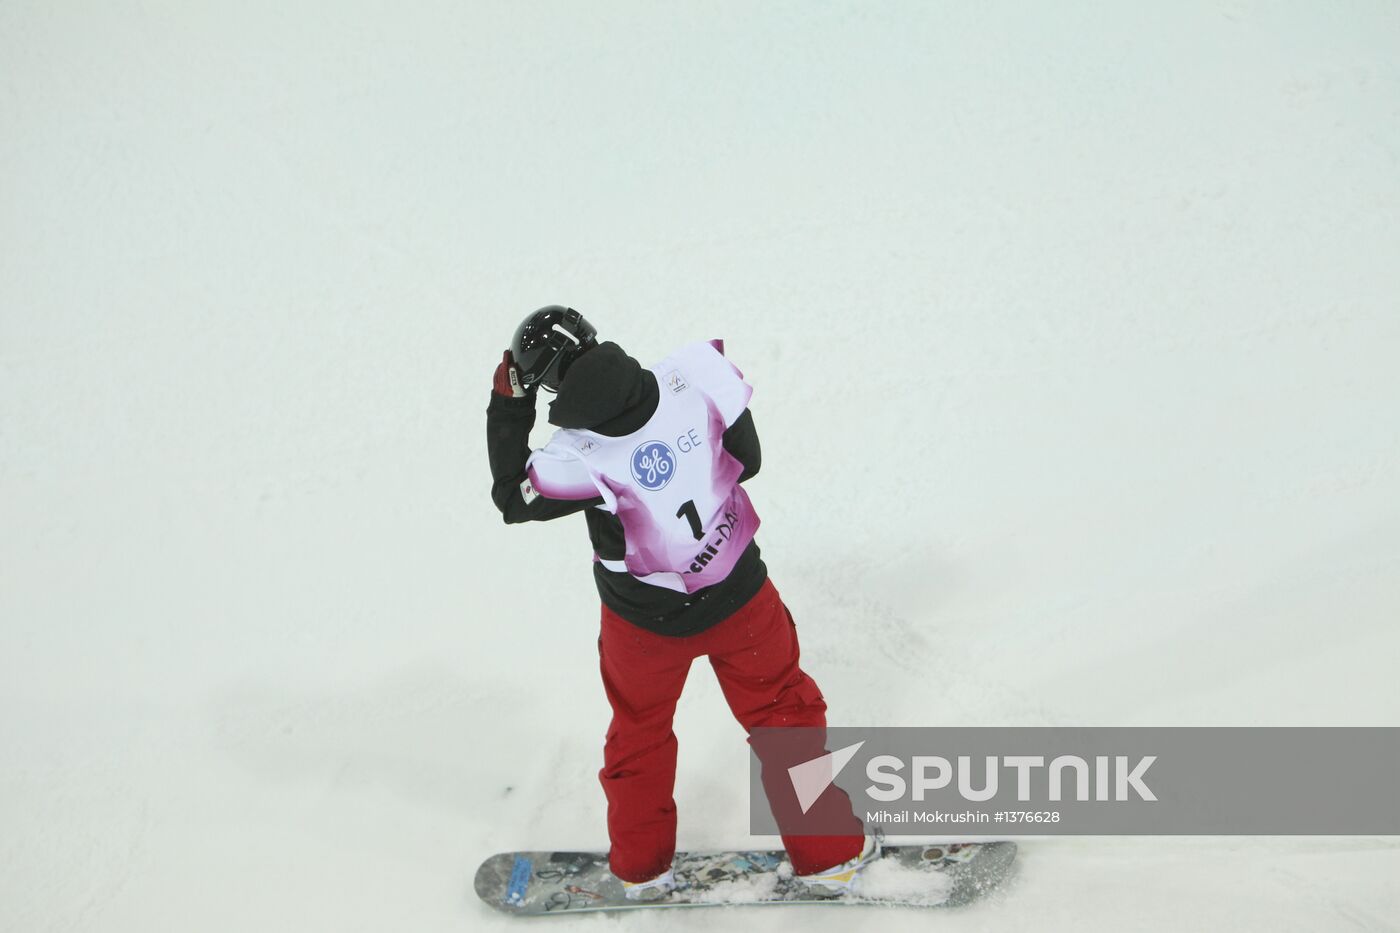 World Snowboard Cup Halfpipe Finals